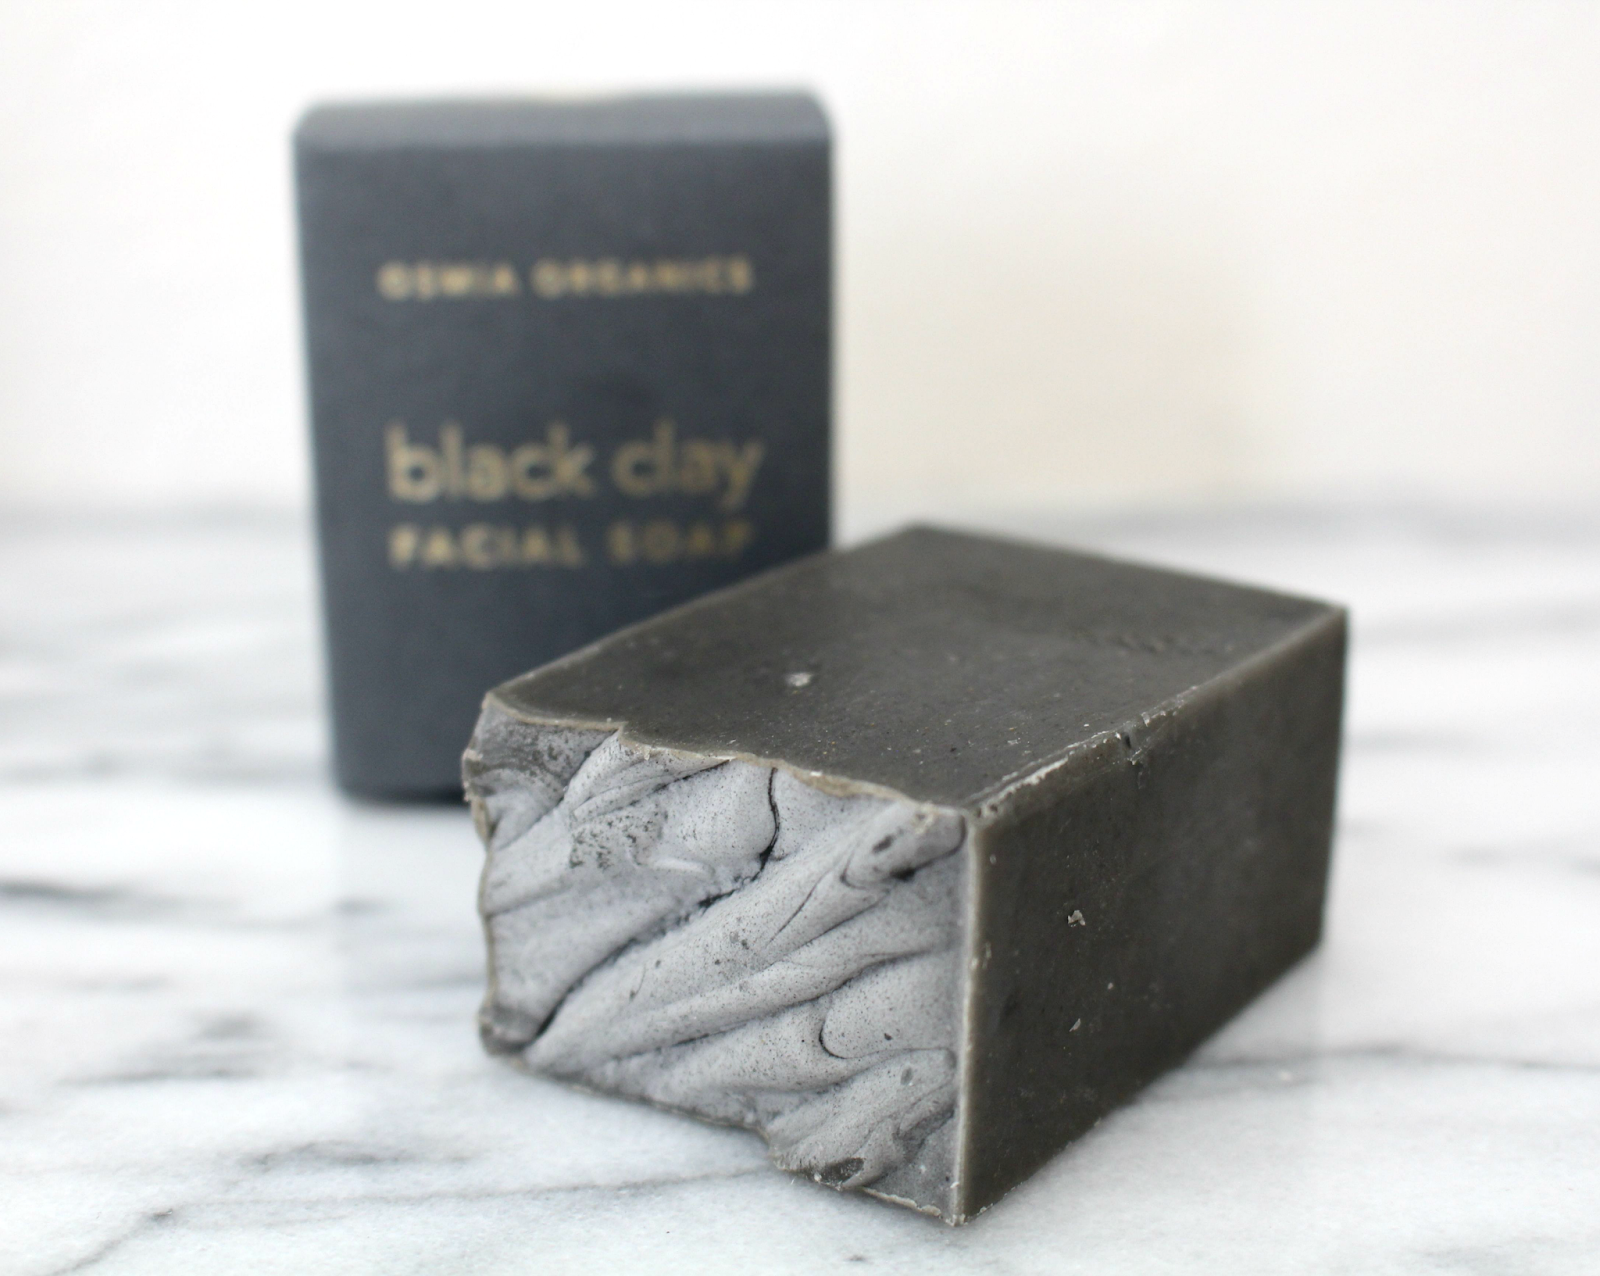 Osmia Organics Black Clay Facial Cleansing Soap for perioral dermatitis